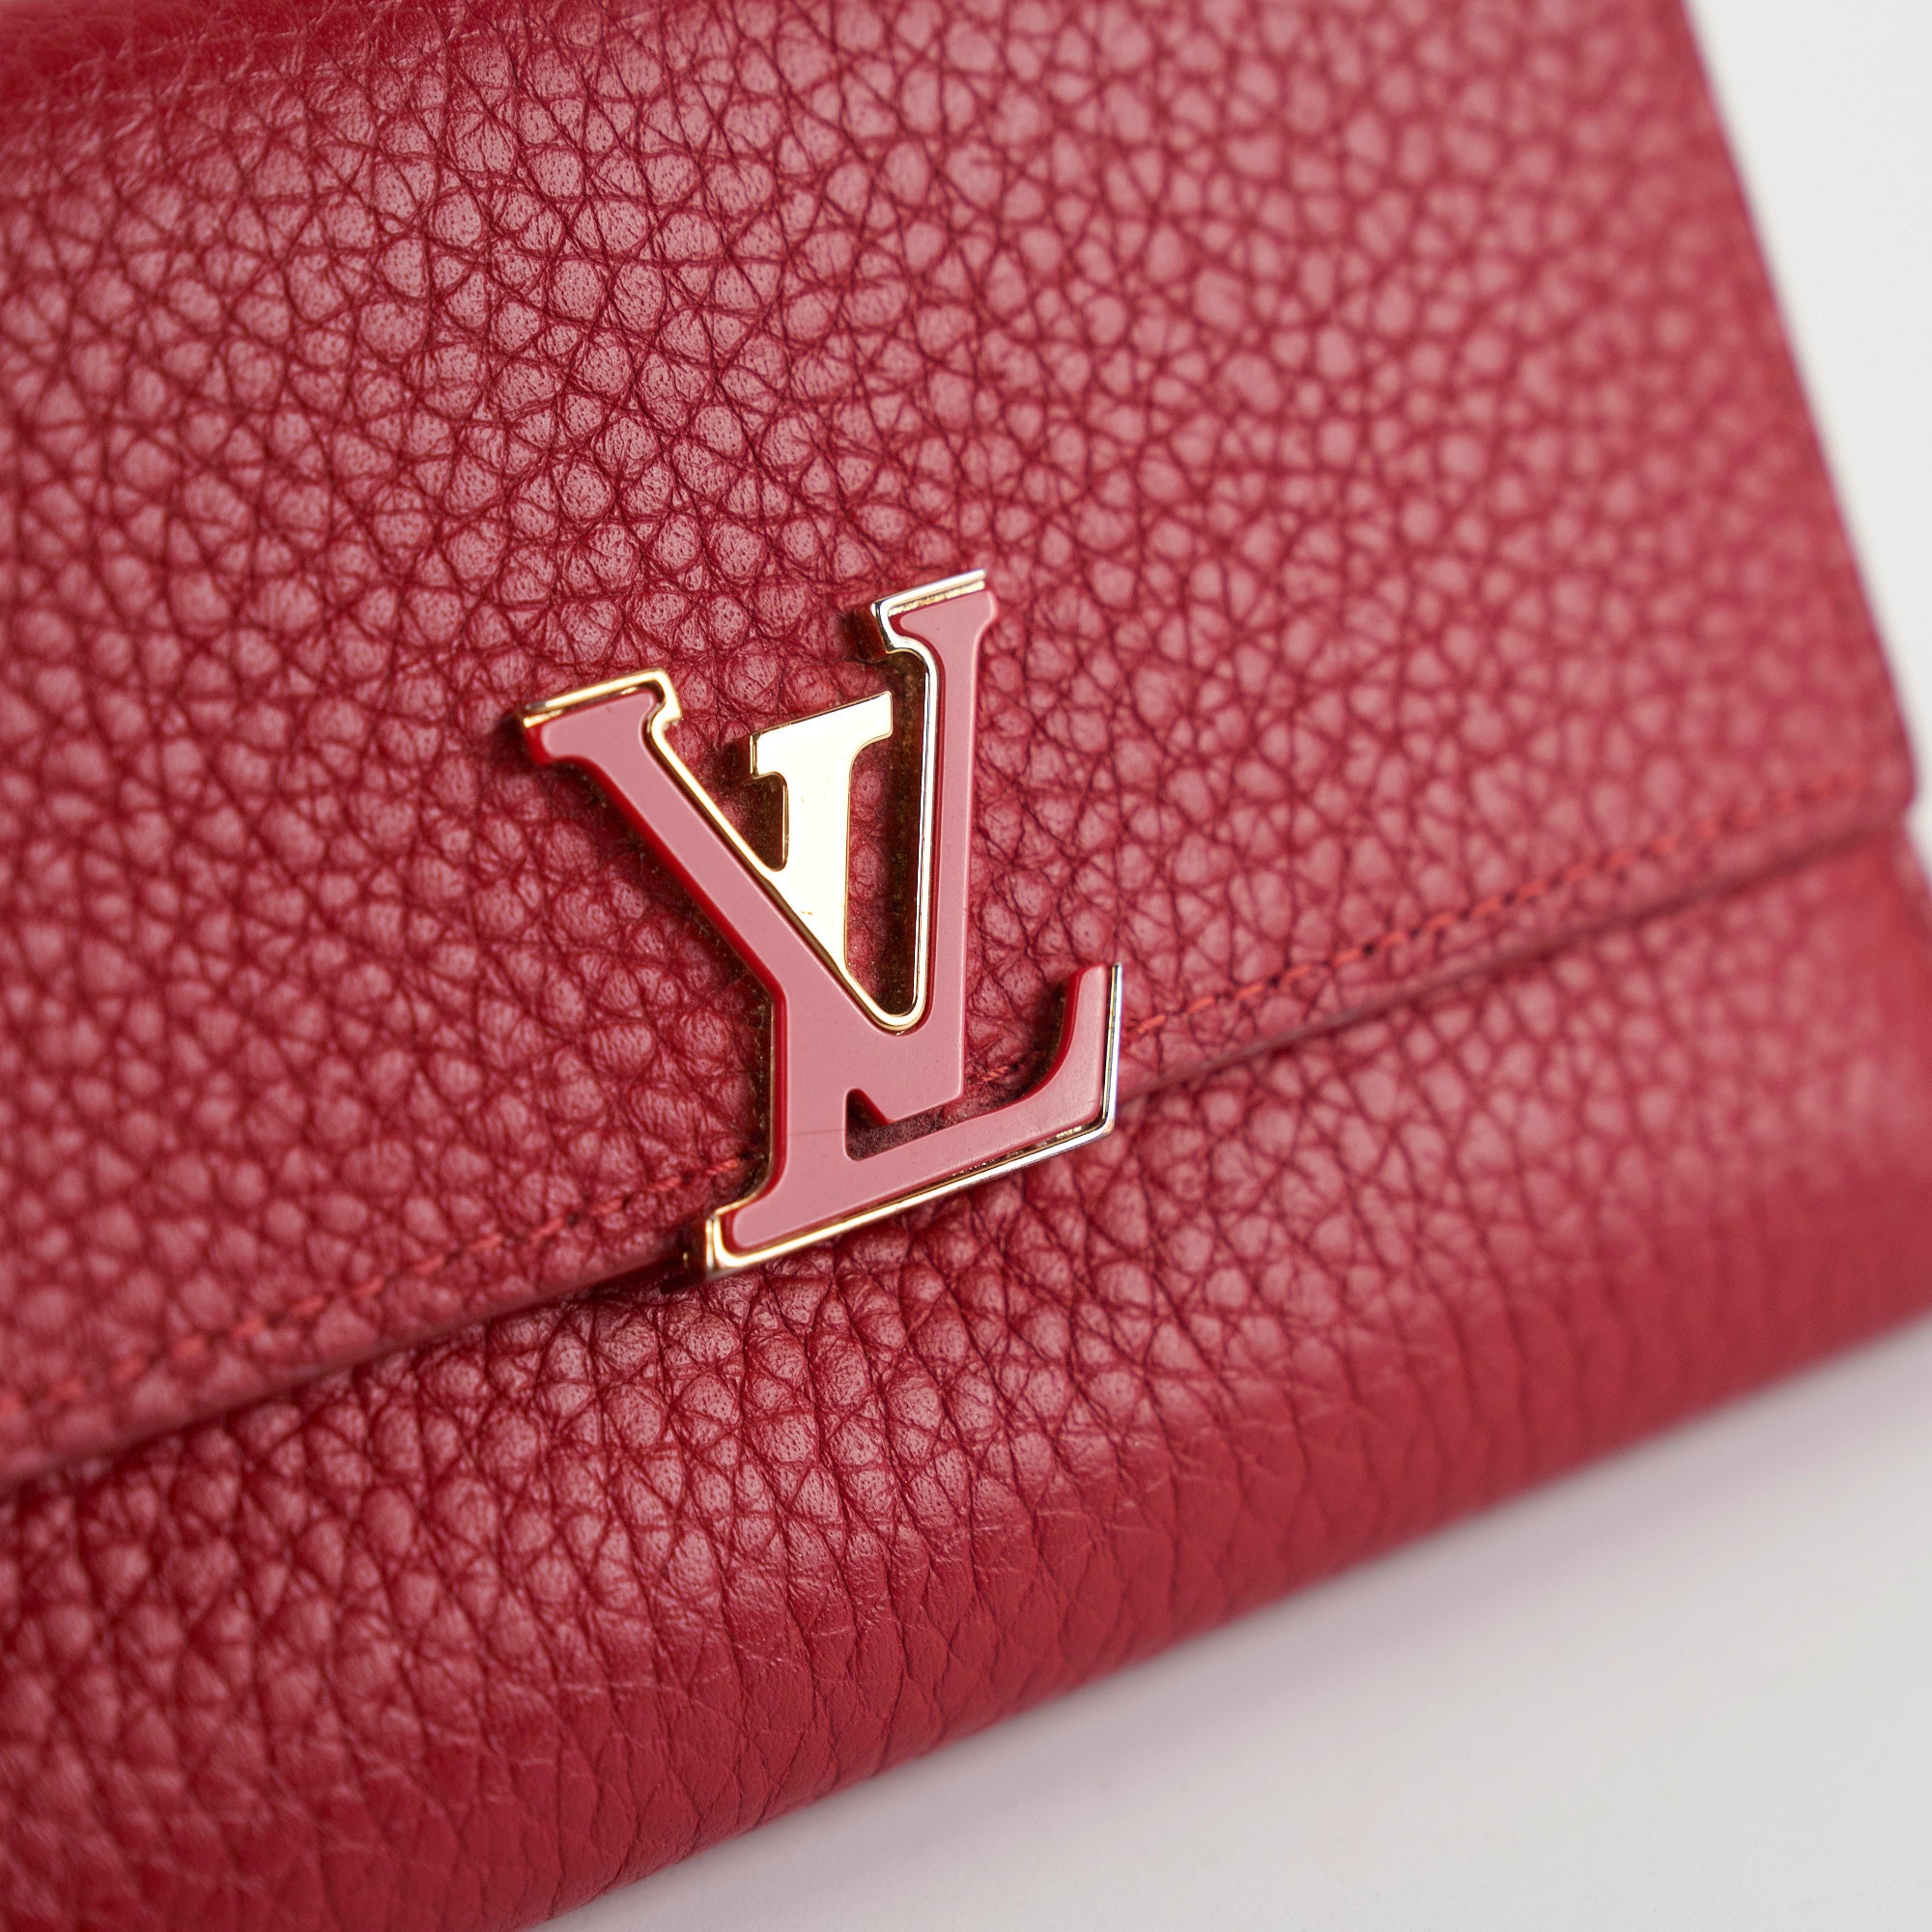 Louis Vuitton Capucines Compact Wallet Red - THE PURSE AFFAIR